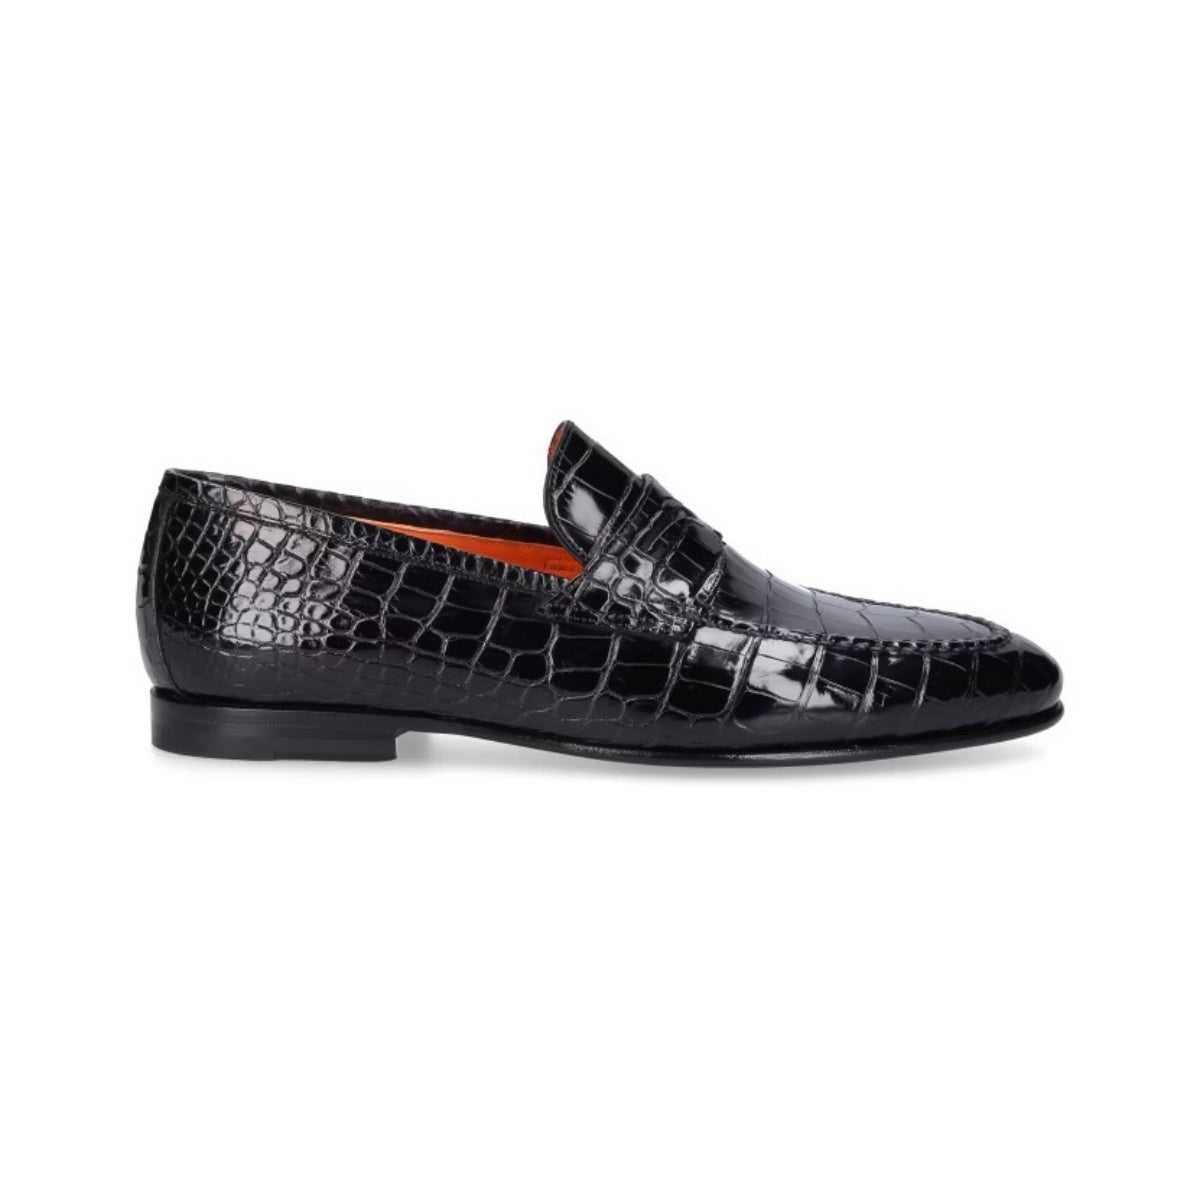 Santoni black crocodile loafer shoes